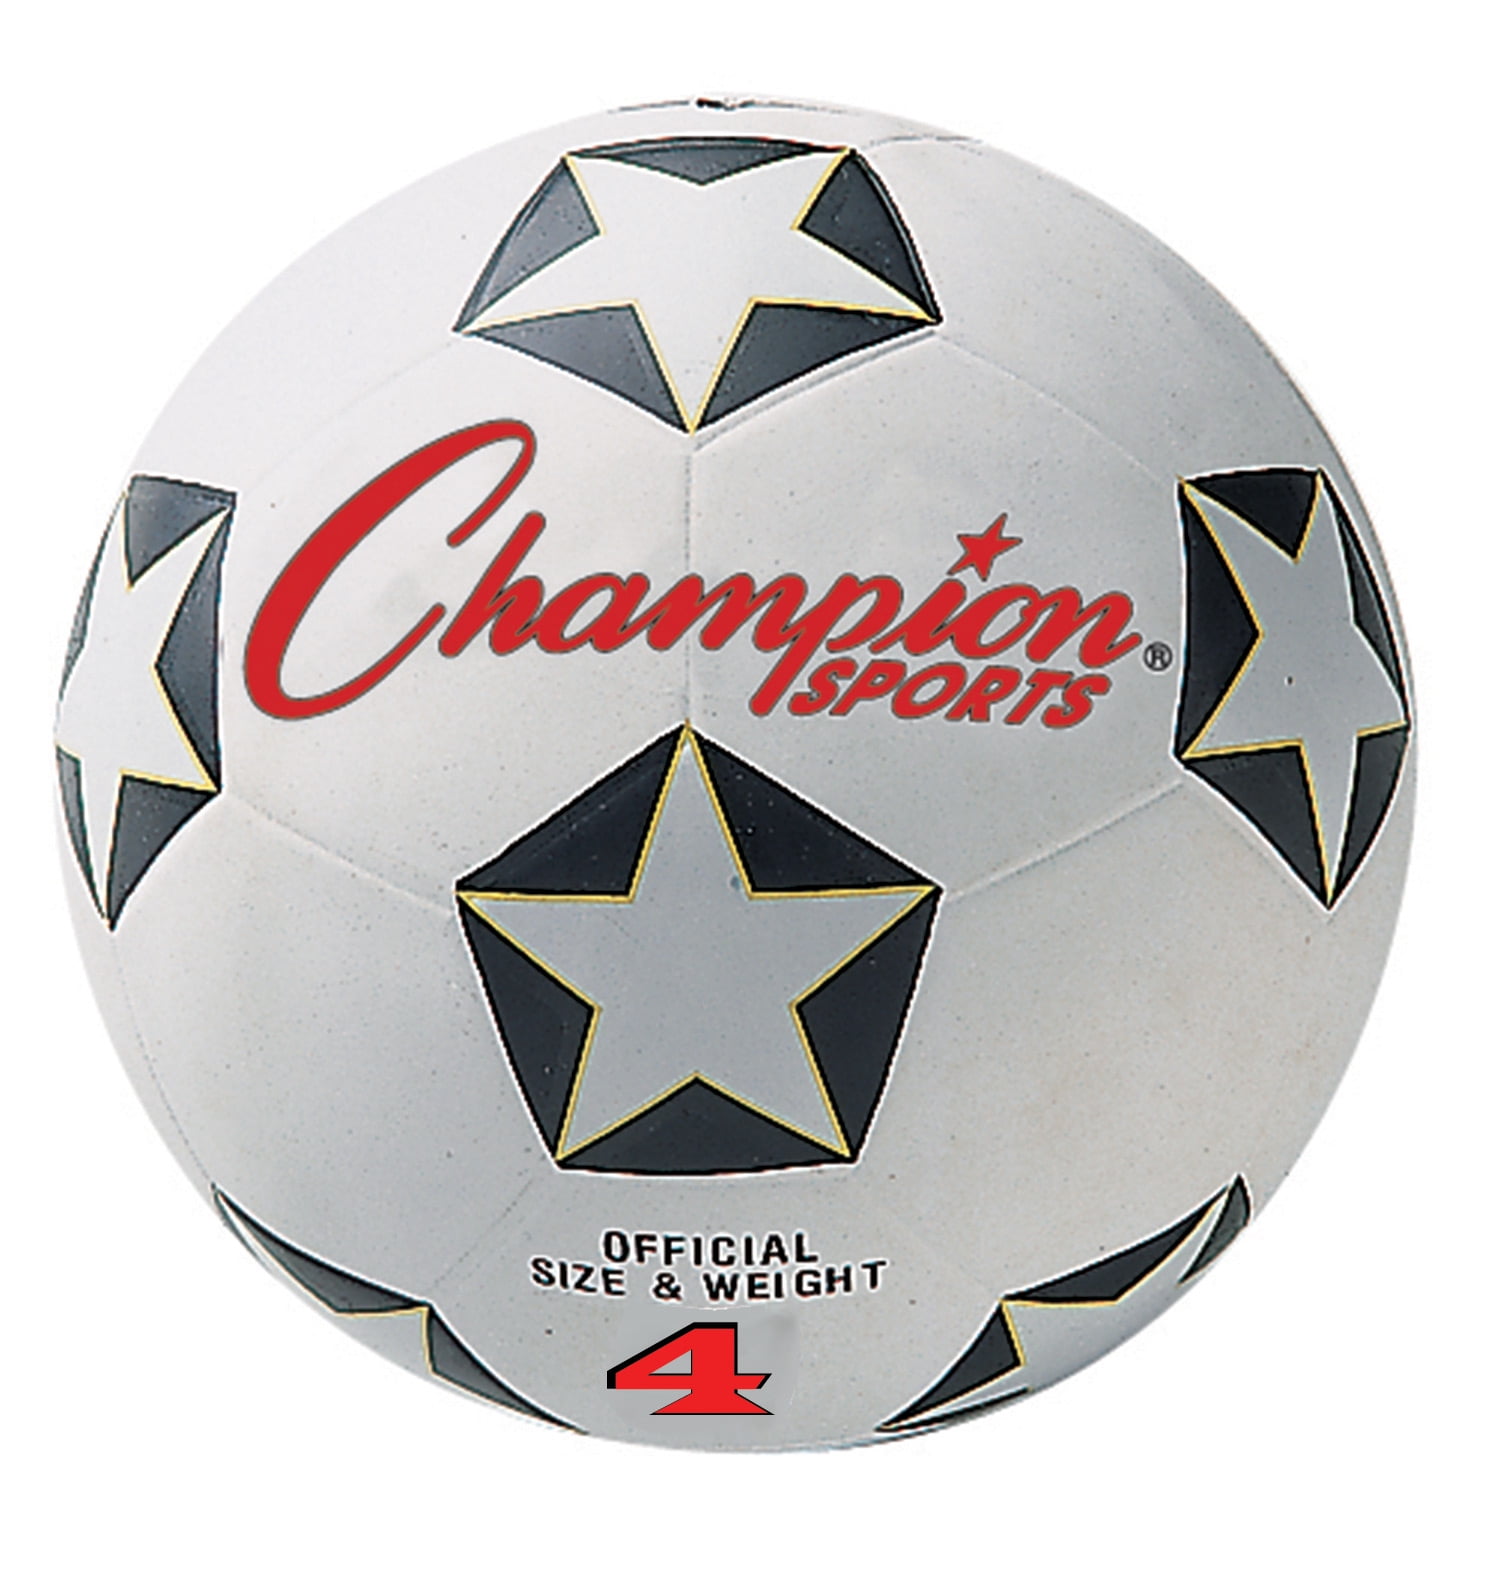 Blue/White Size 3 Champion Sports Challenger Soccer Ball 